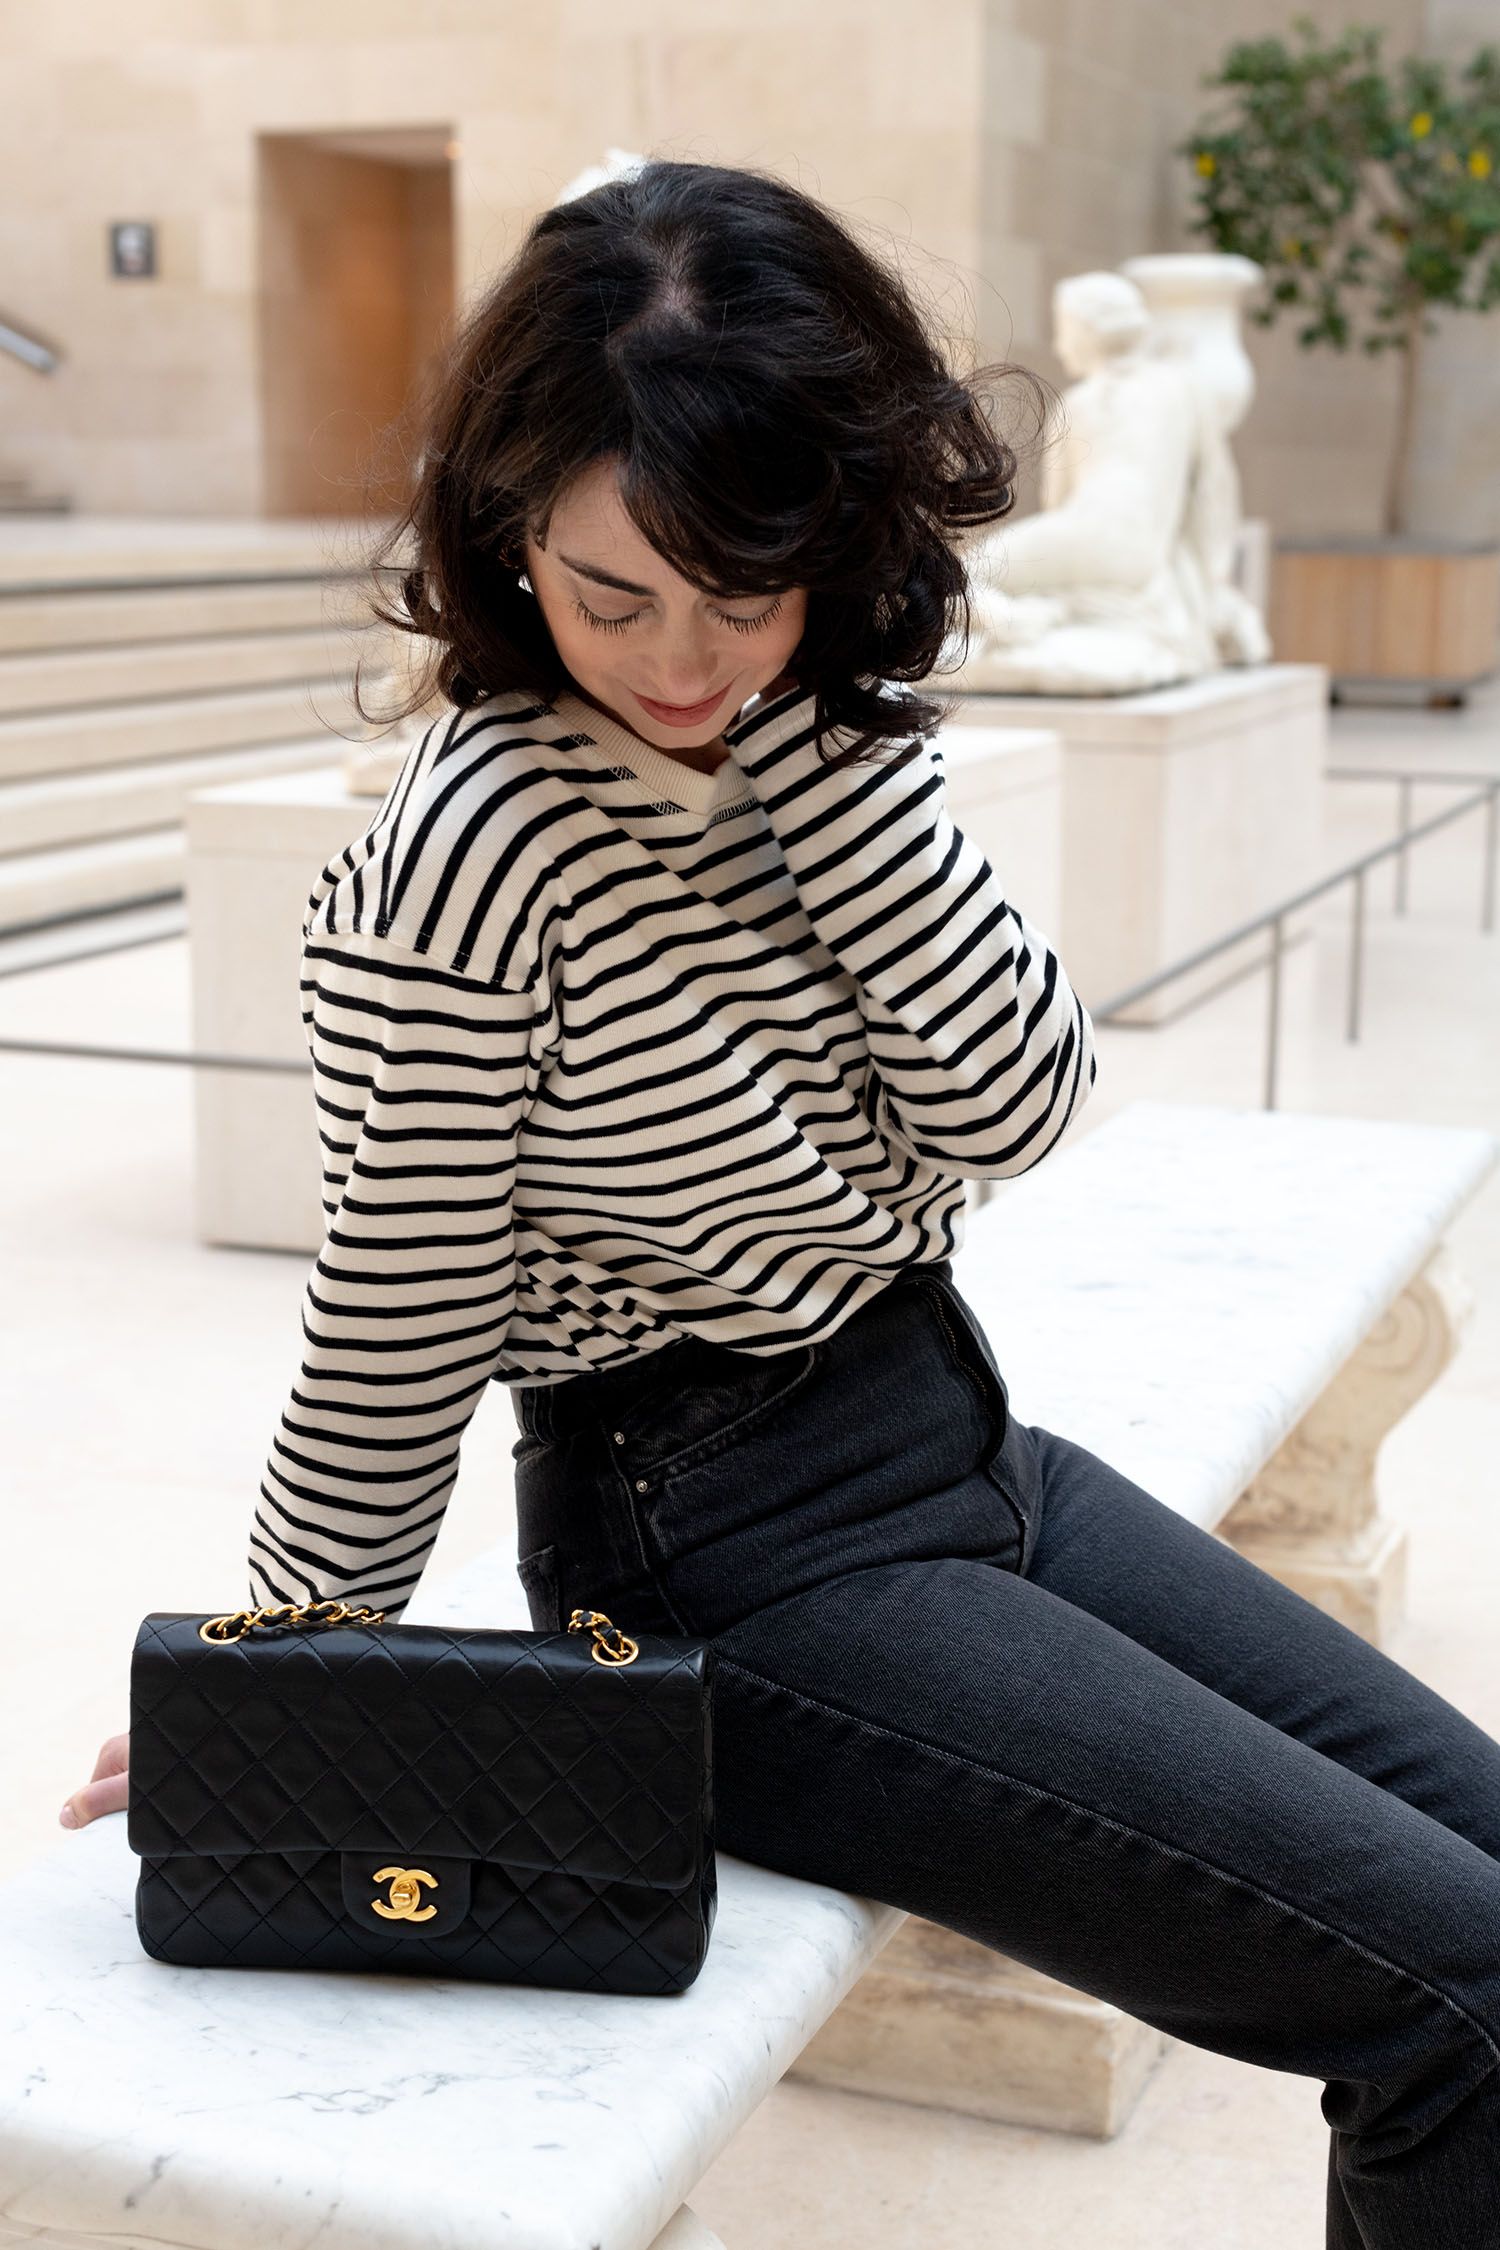 Coco & Voltaire - Zara stripe top, Chanel double flap handbag, Zara jeans